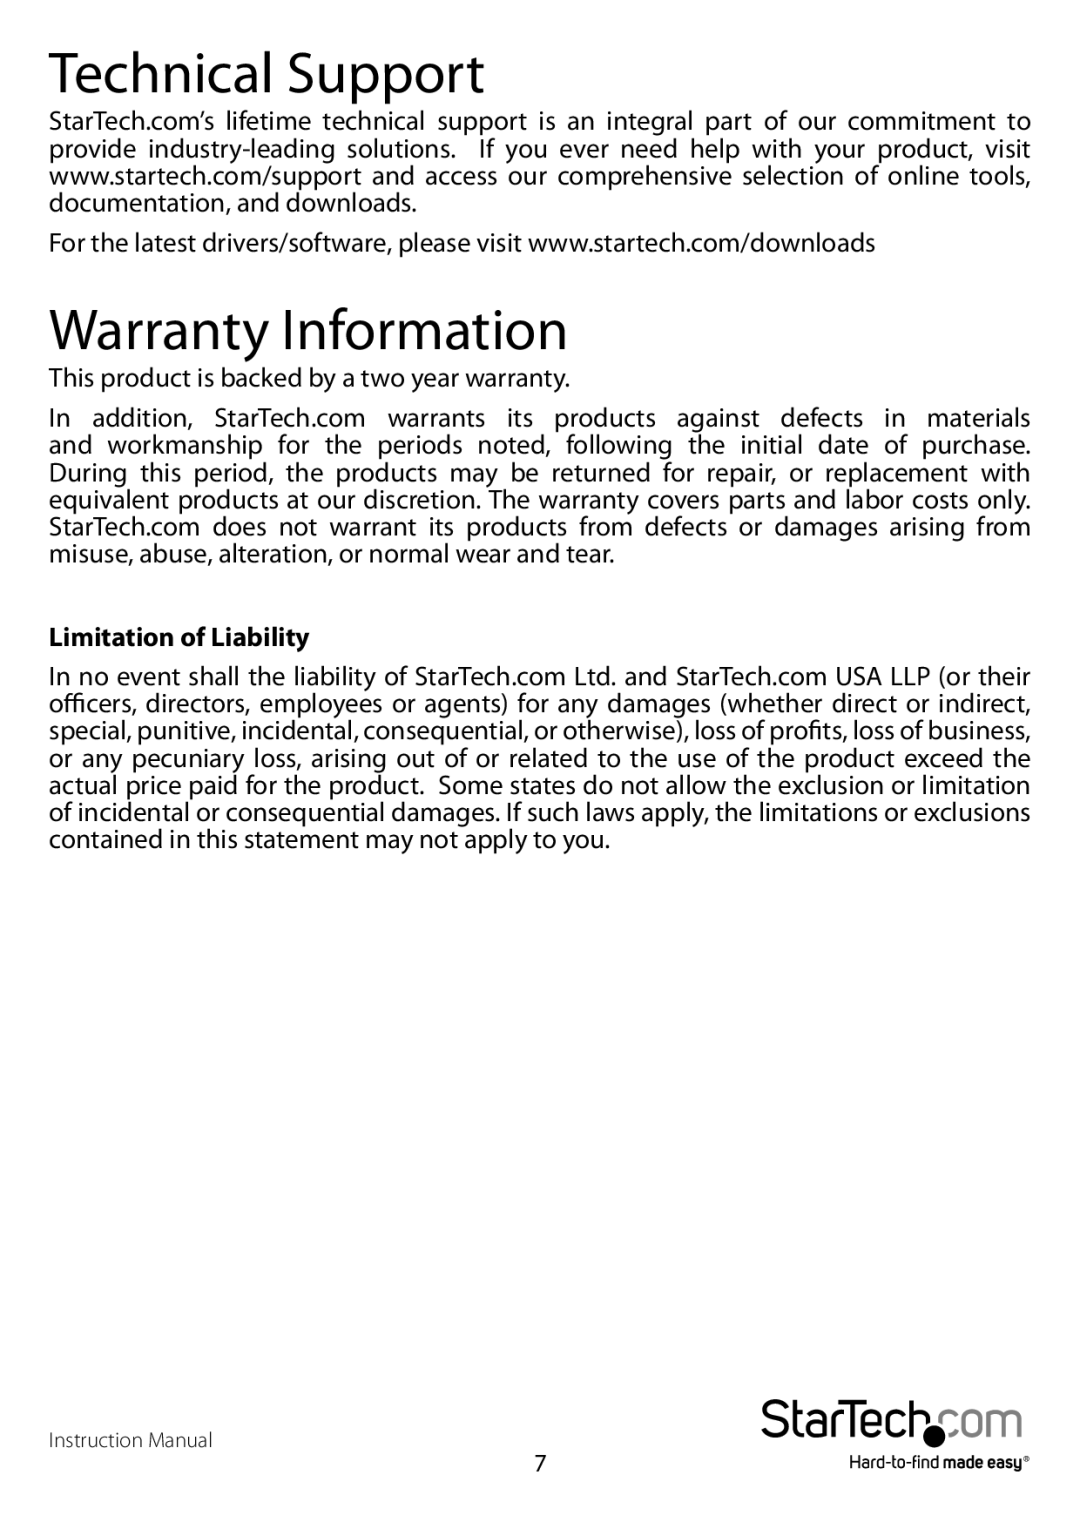 StarTech.com SAT3510U2F manual Technical Support, Warranty Information, Limitation of Liability 